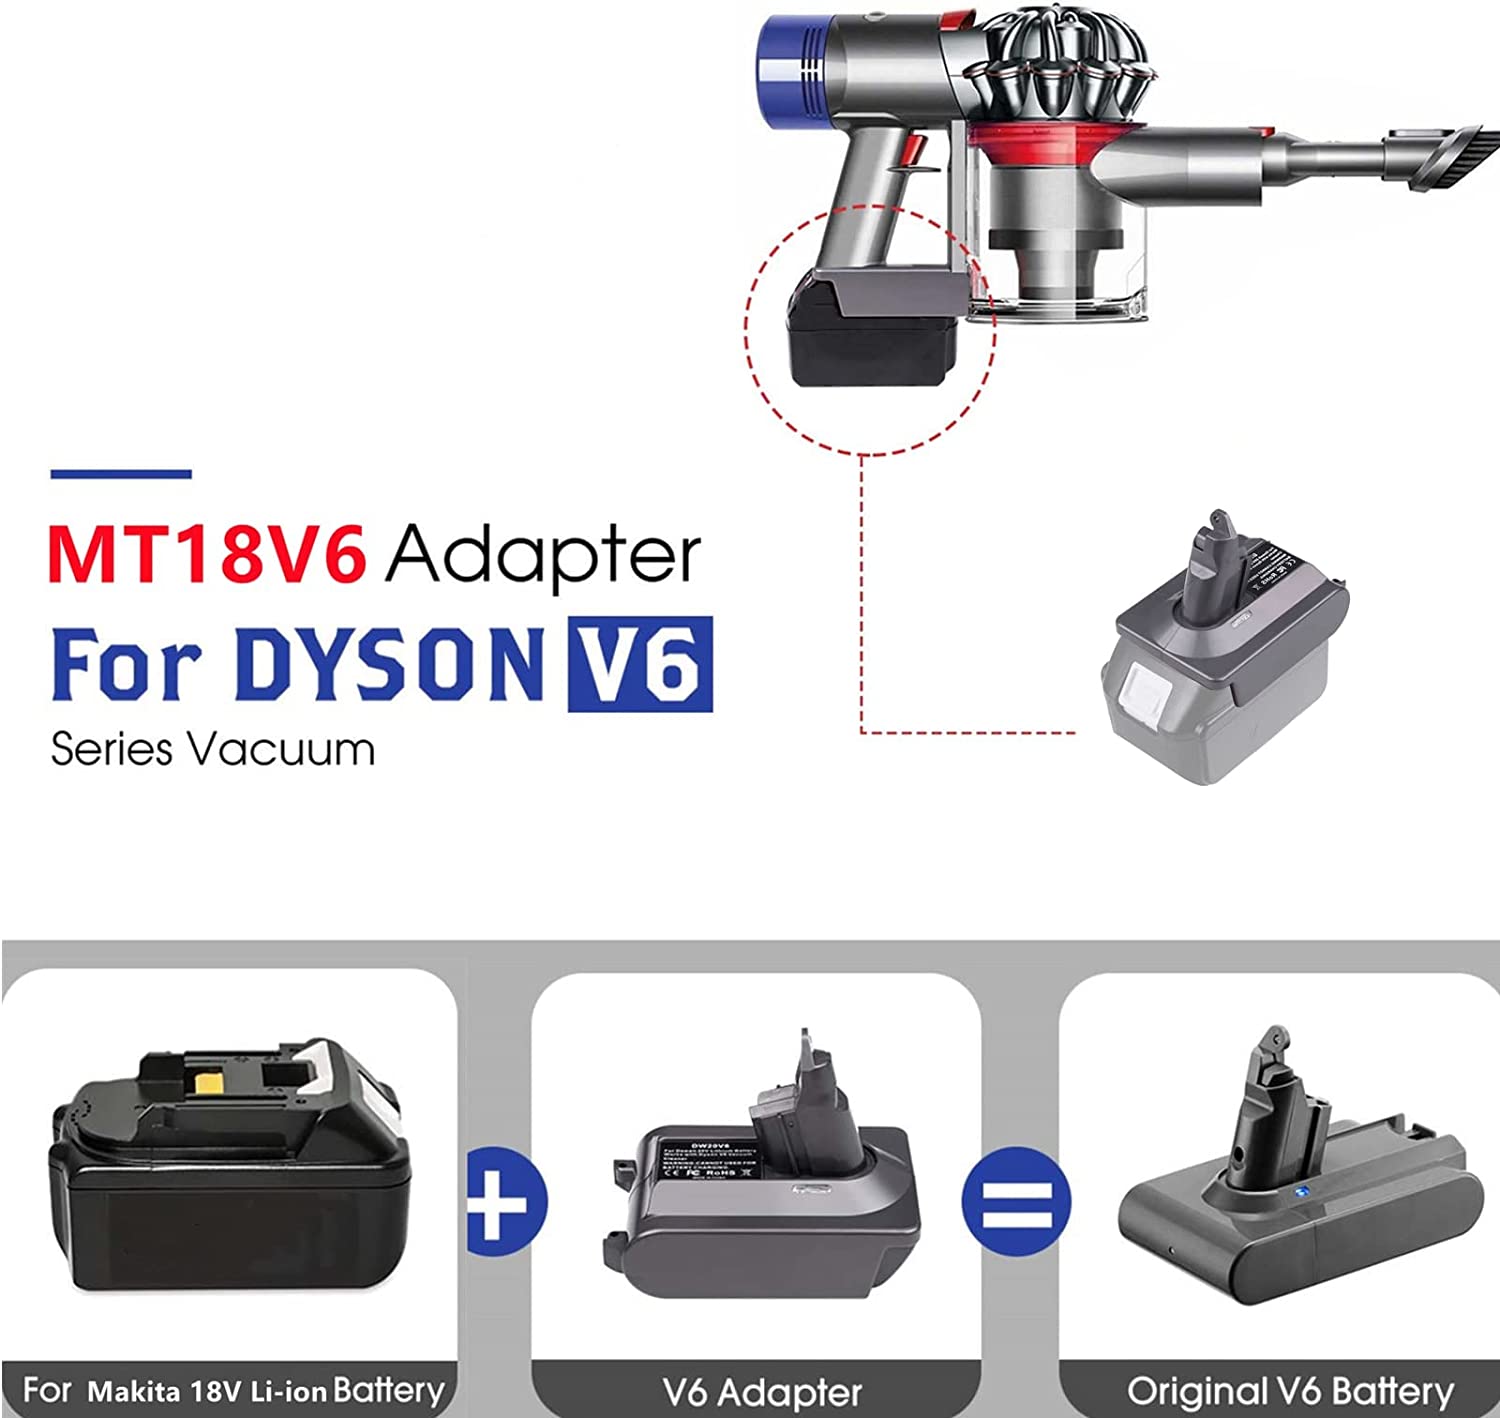 Adaptor baterei Dyson V6 kanggo Baterai Lithium Makita 18V Diowahi dadi baterei Dyson V6